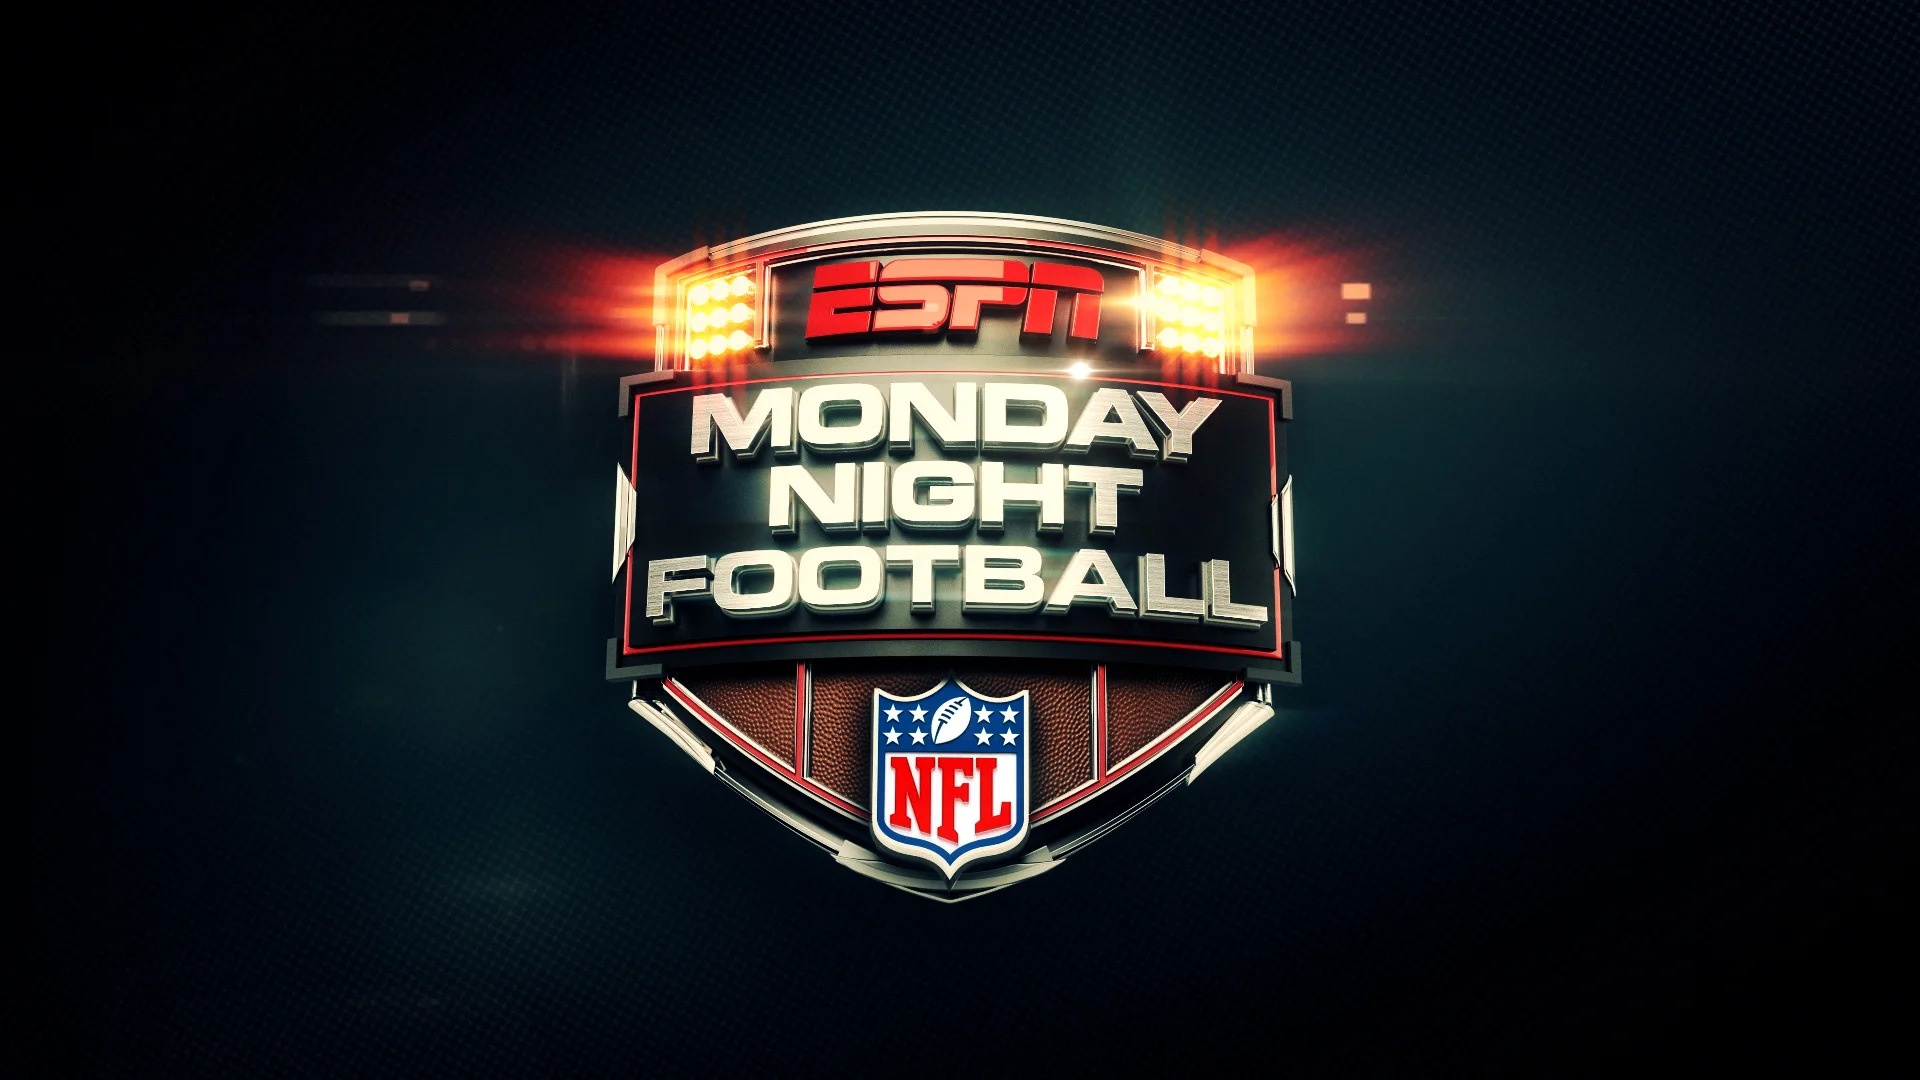 Monday Night Football Returns September 11th on Vimeo